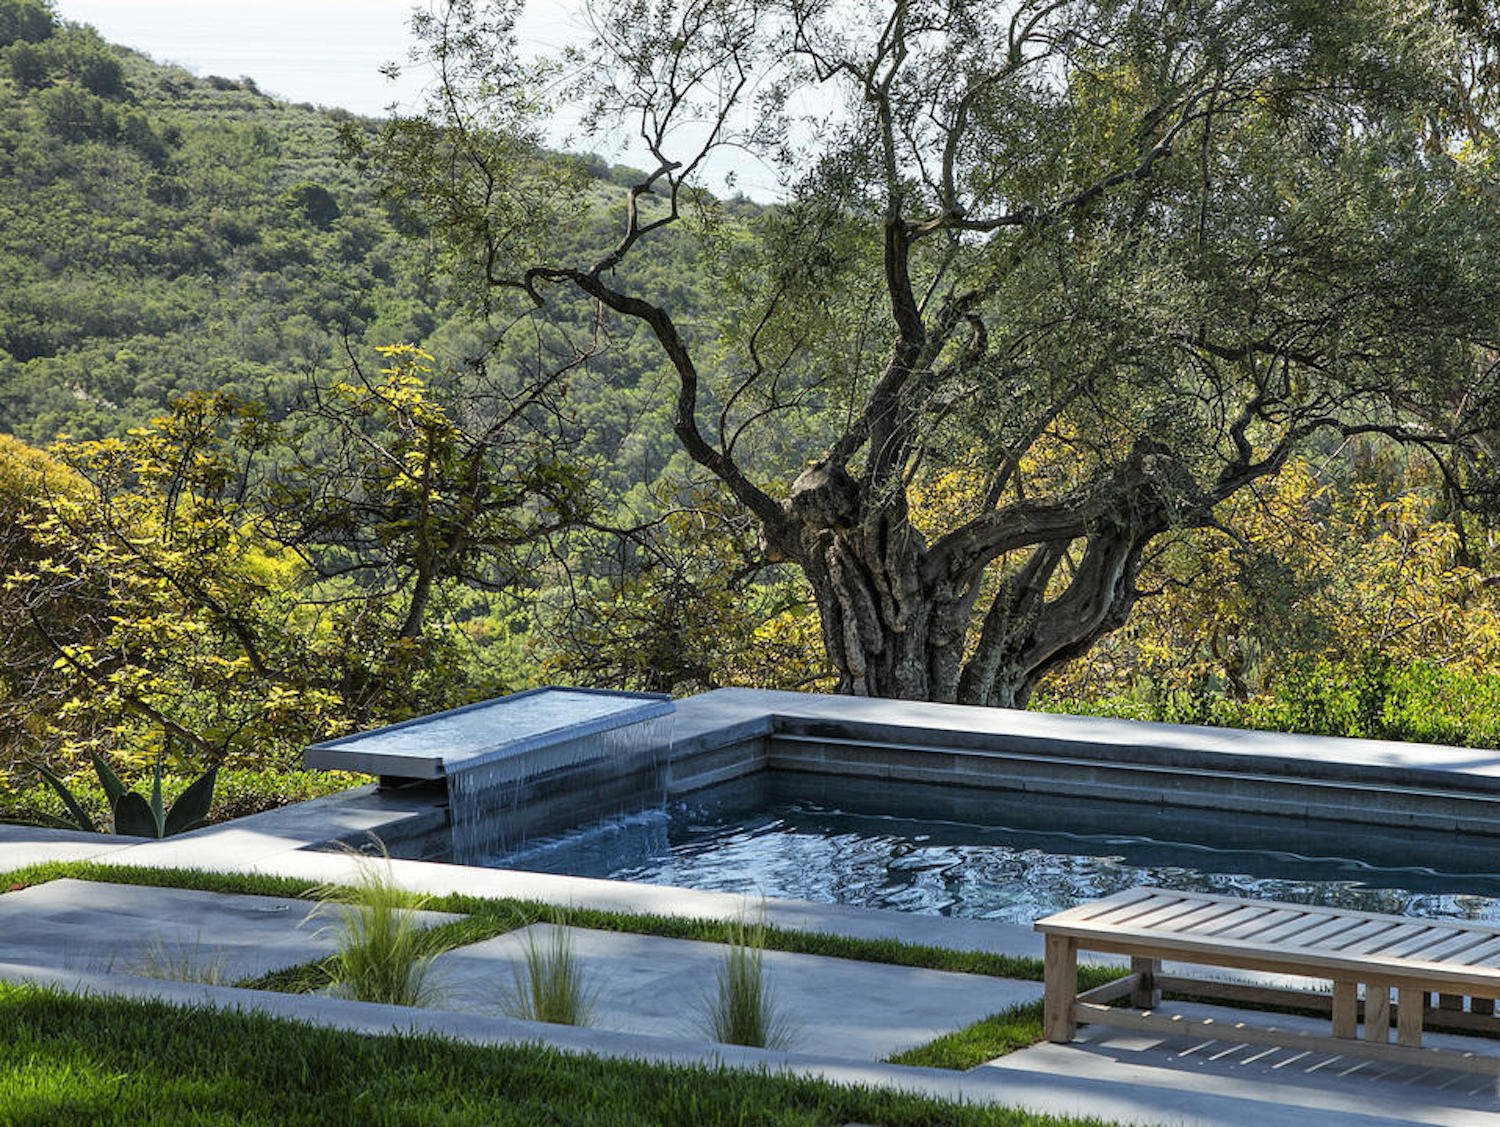 Casa de la actriz Natalie Portman en Montecito piscina